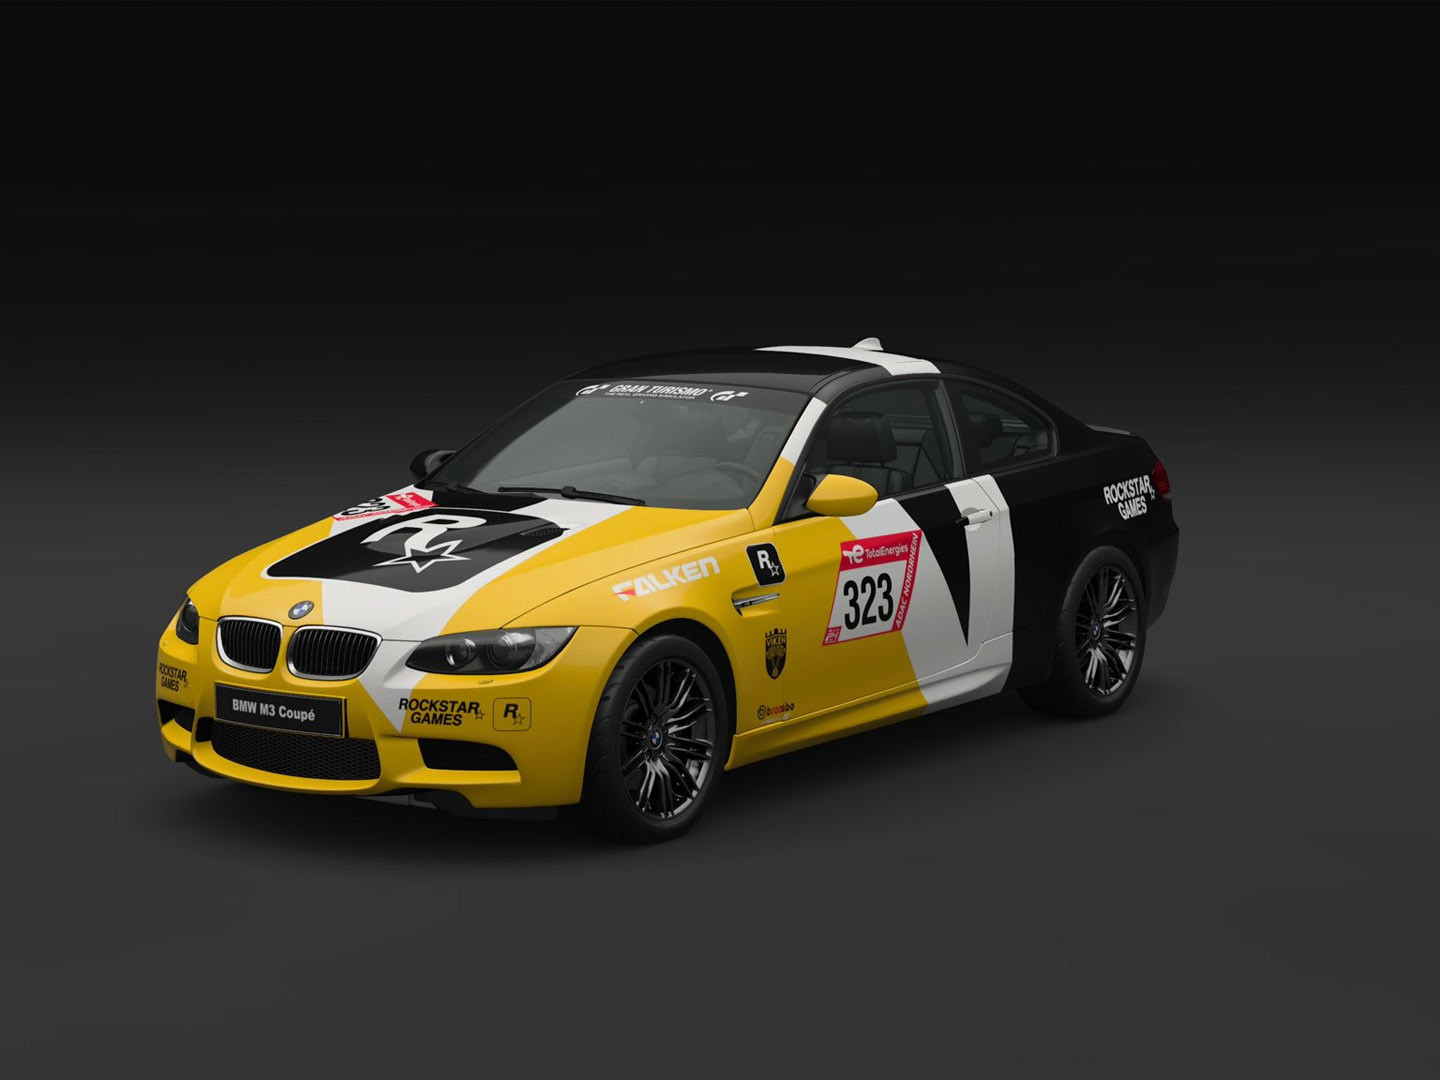 Rockstar Racing BMW M3 Gran Turismo 7